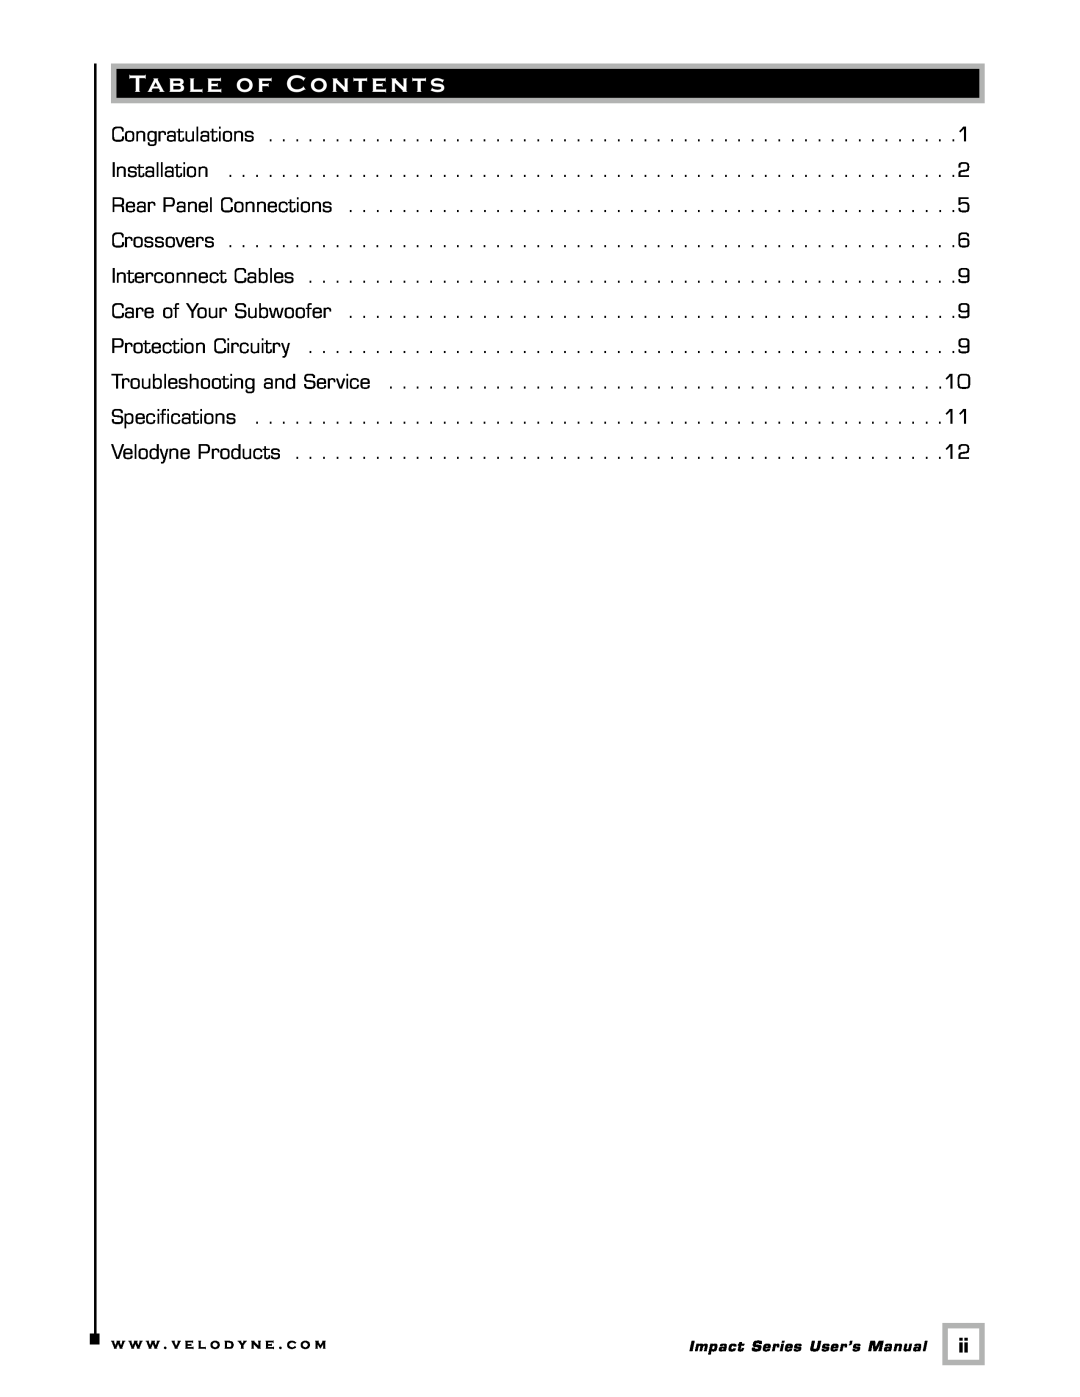 Velodyne Acoustics 63-IMP user manual Table of Contents, w w w . v e l o d y n e . c o m 